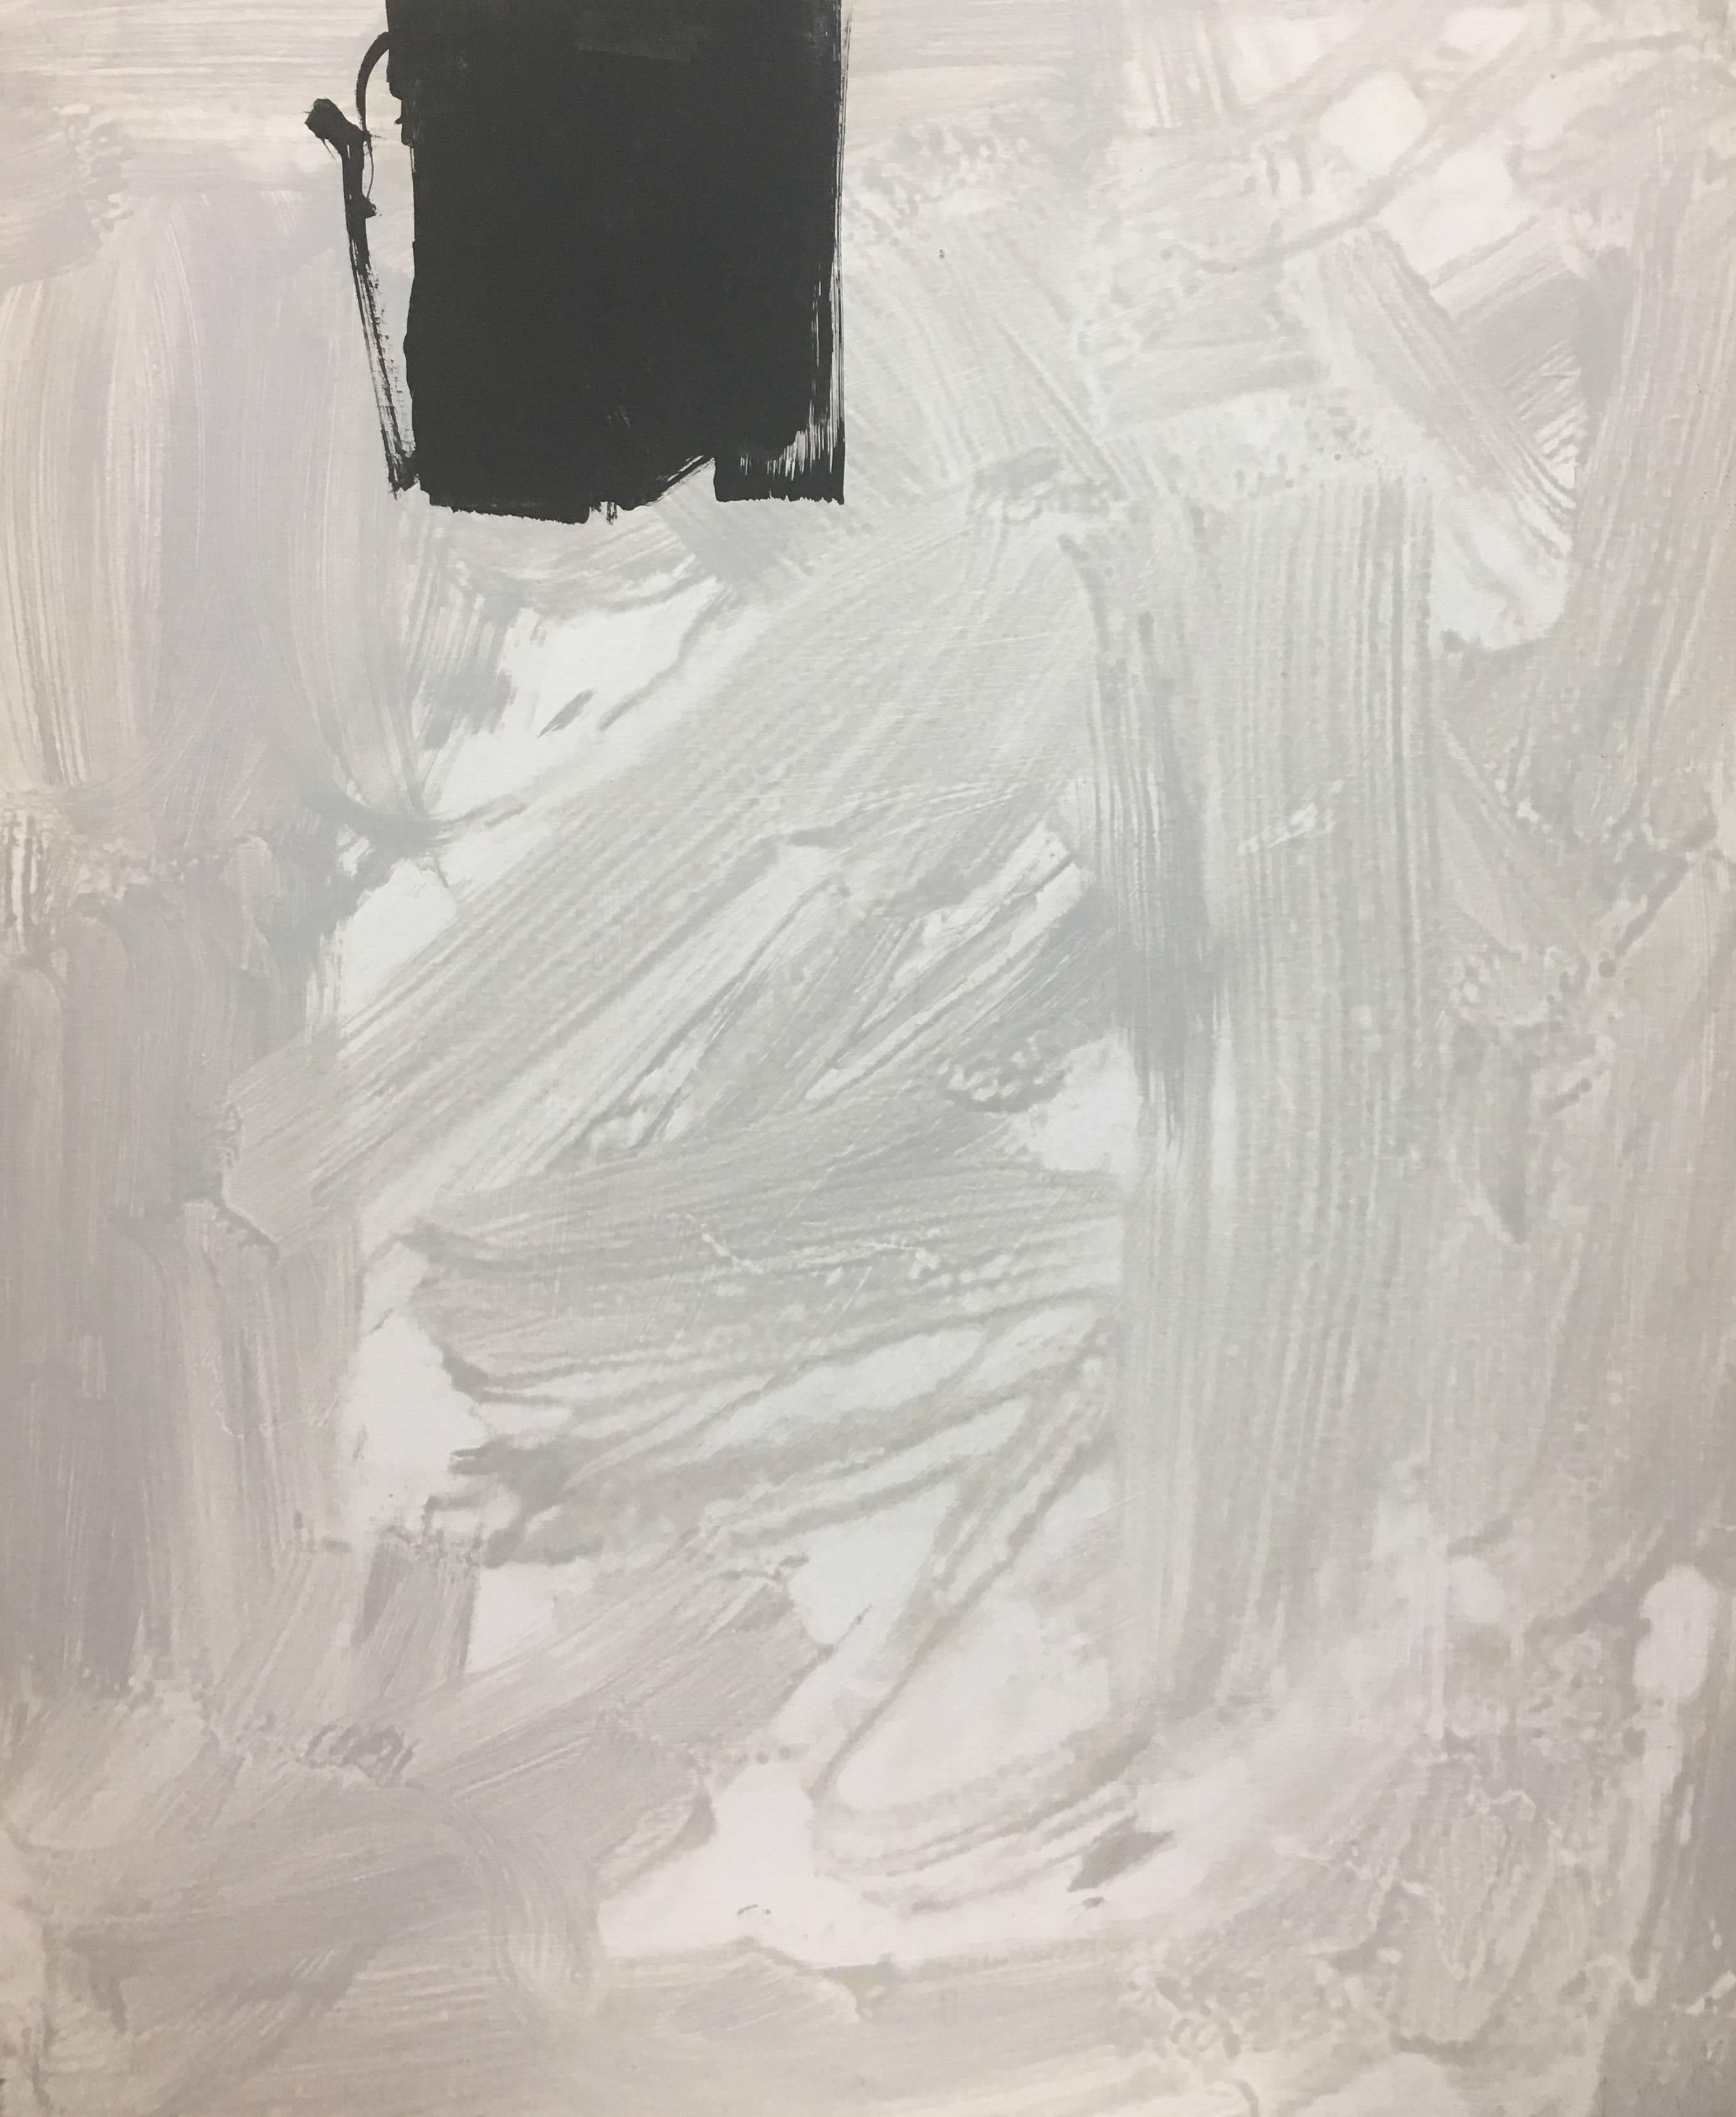 Ruz  18 Grey  Black  Vertical  original abstract acrylic painting